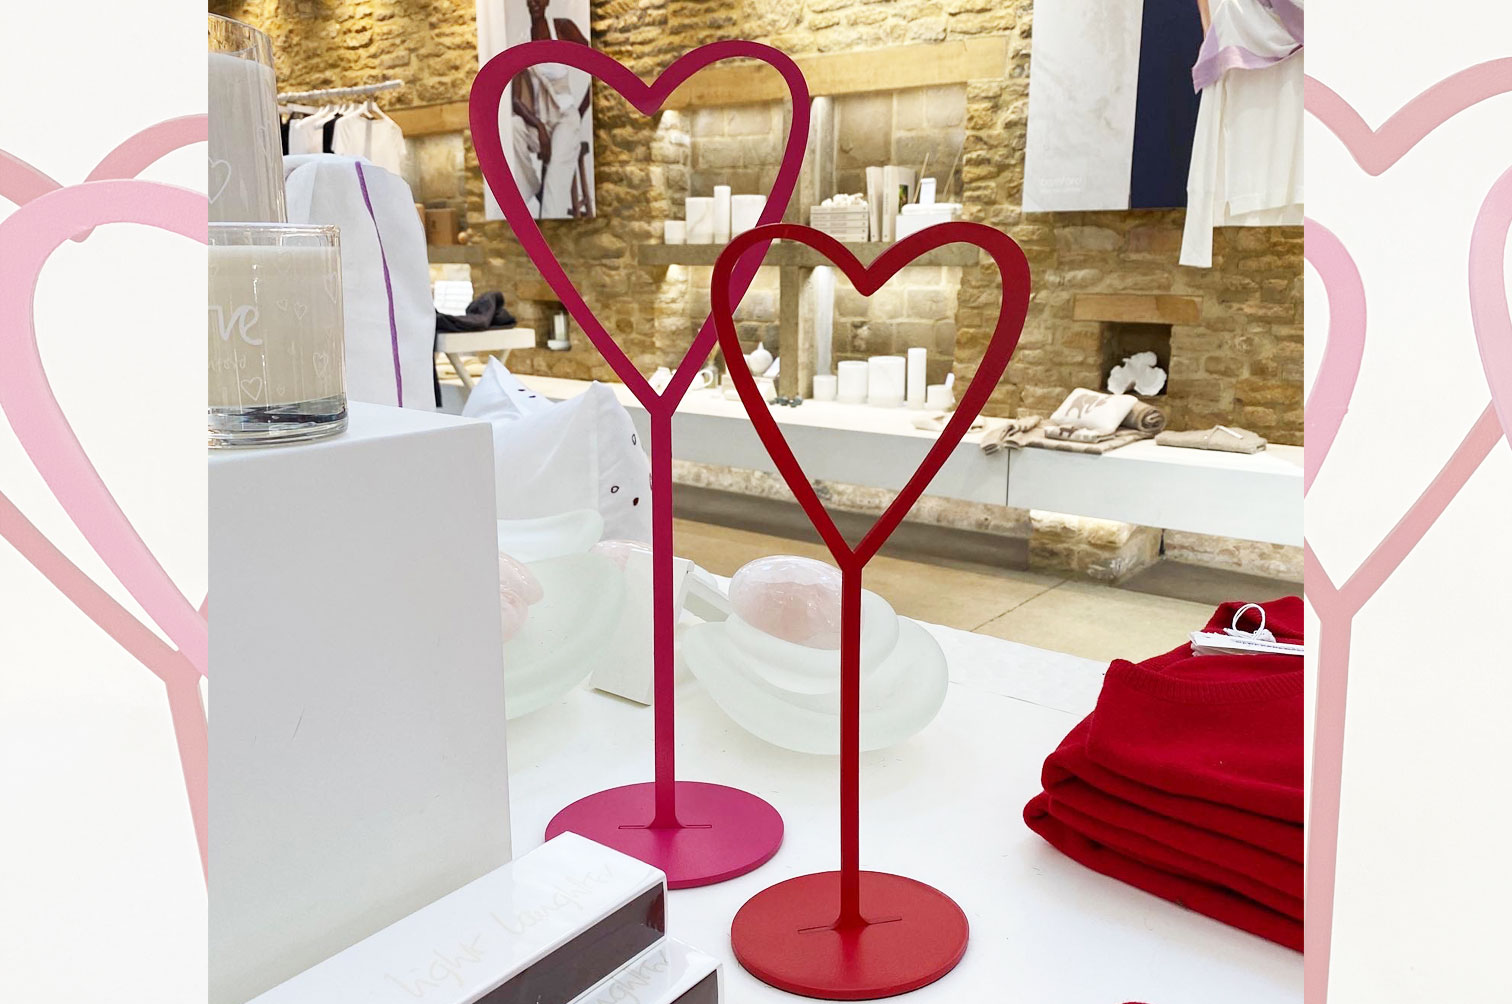 Laser cut heart valentines shop display.